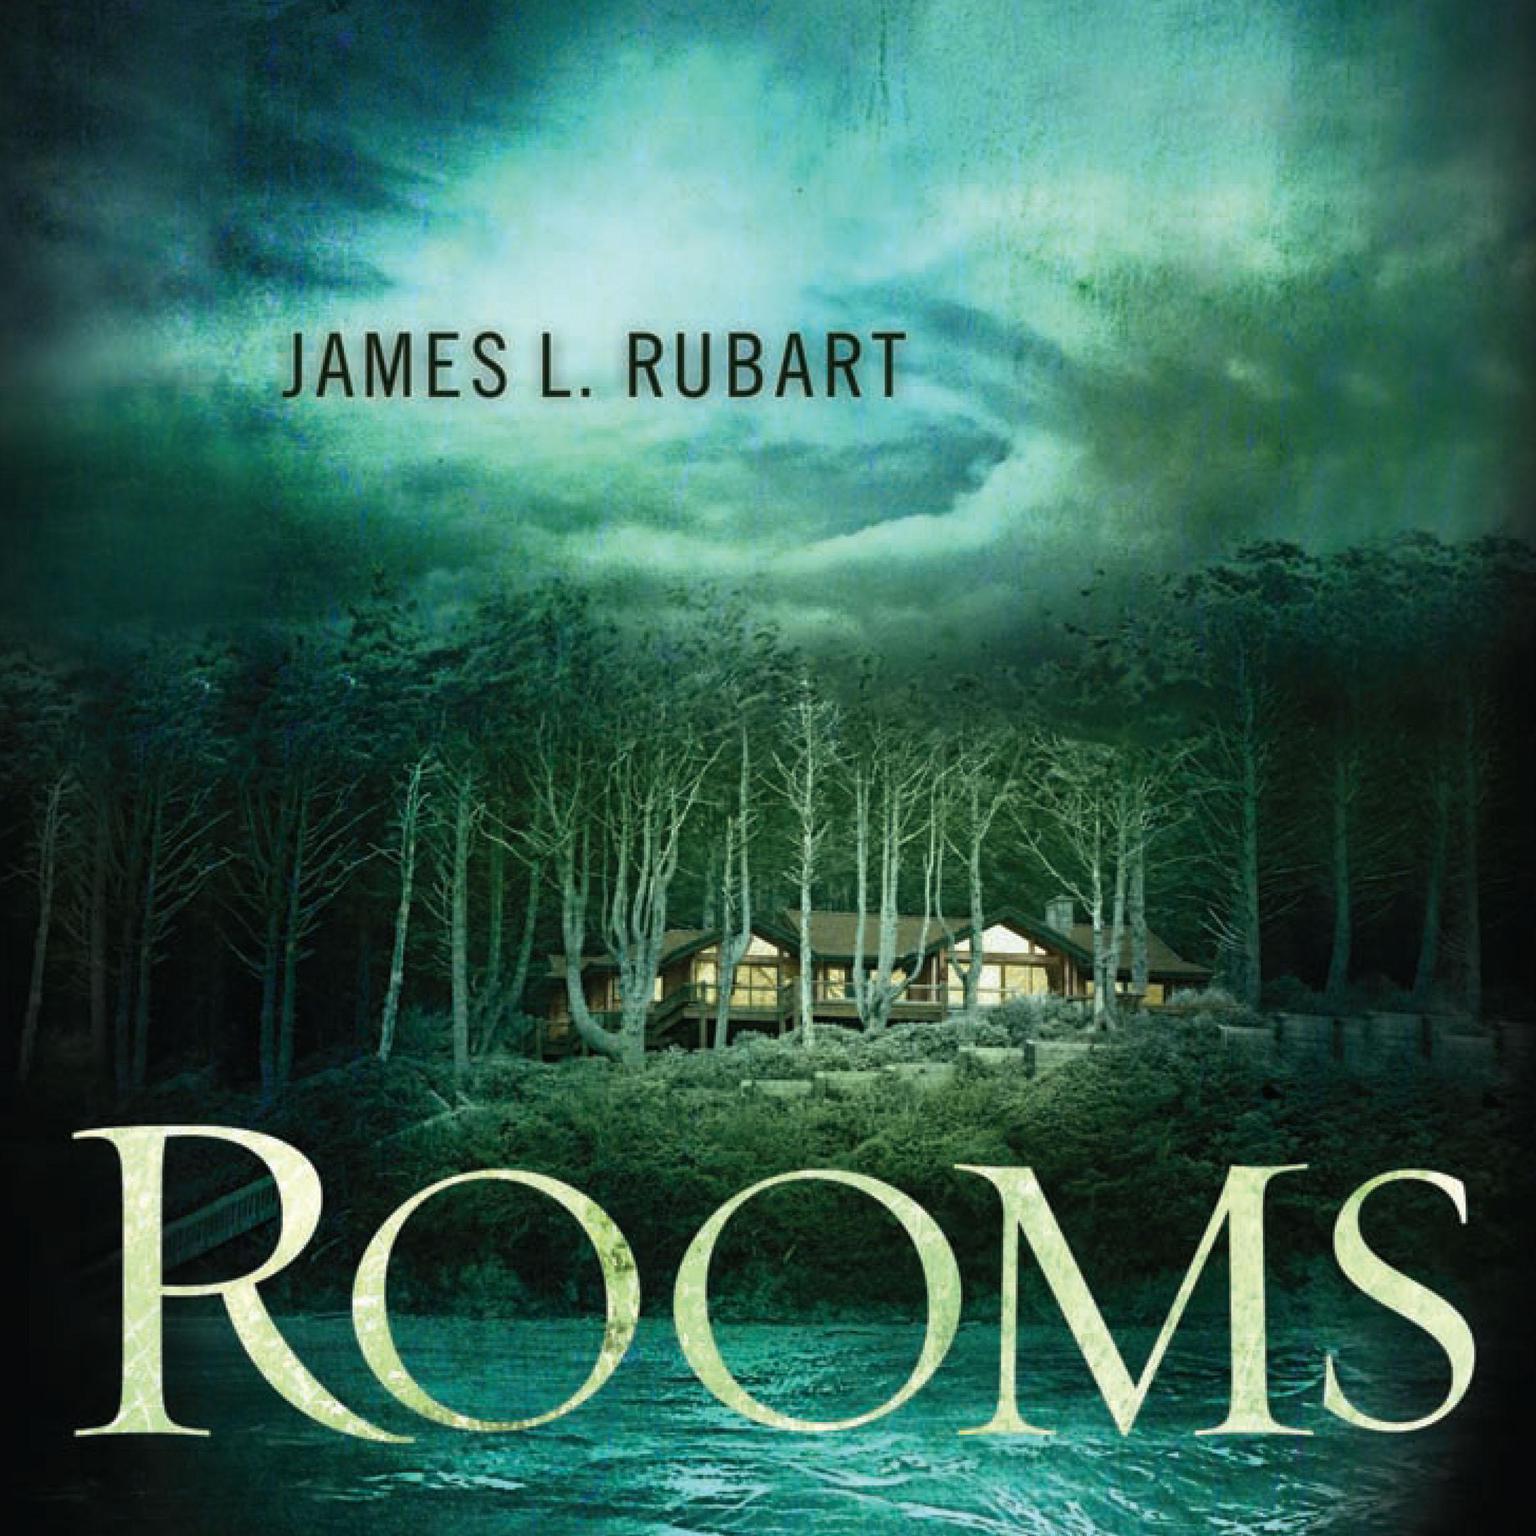 Rooms: A Novel Audiobook, by James L. Rubart